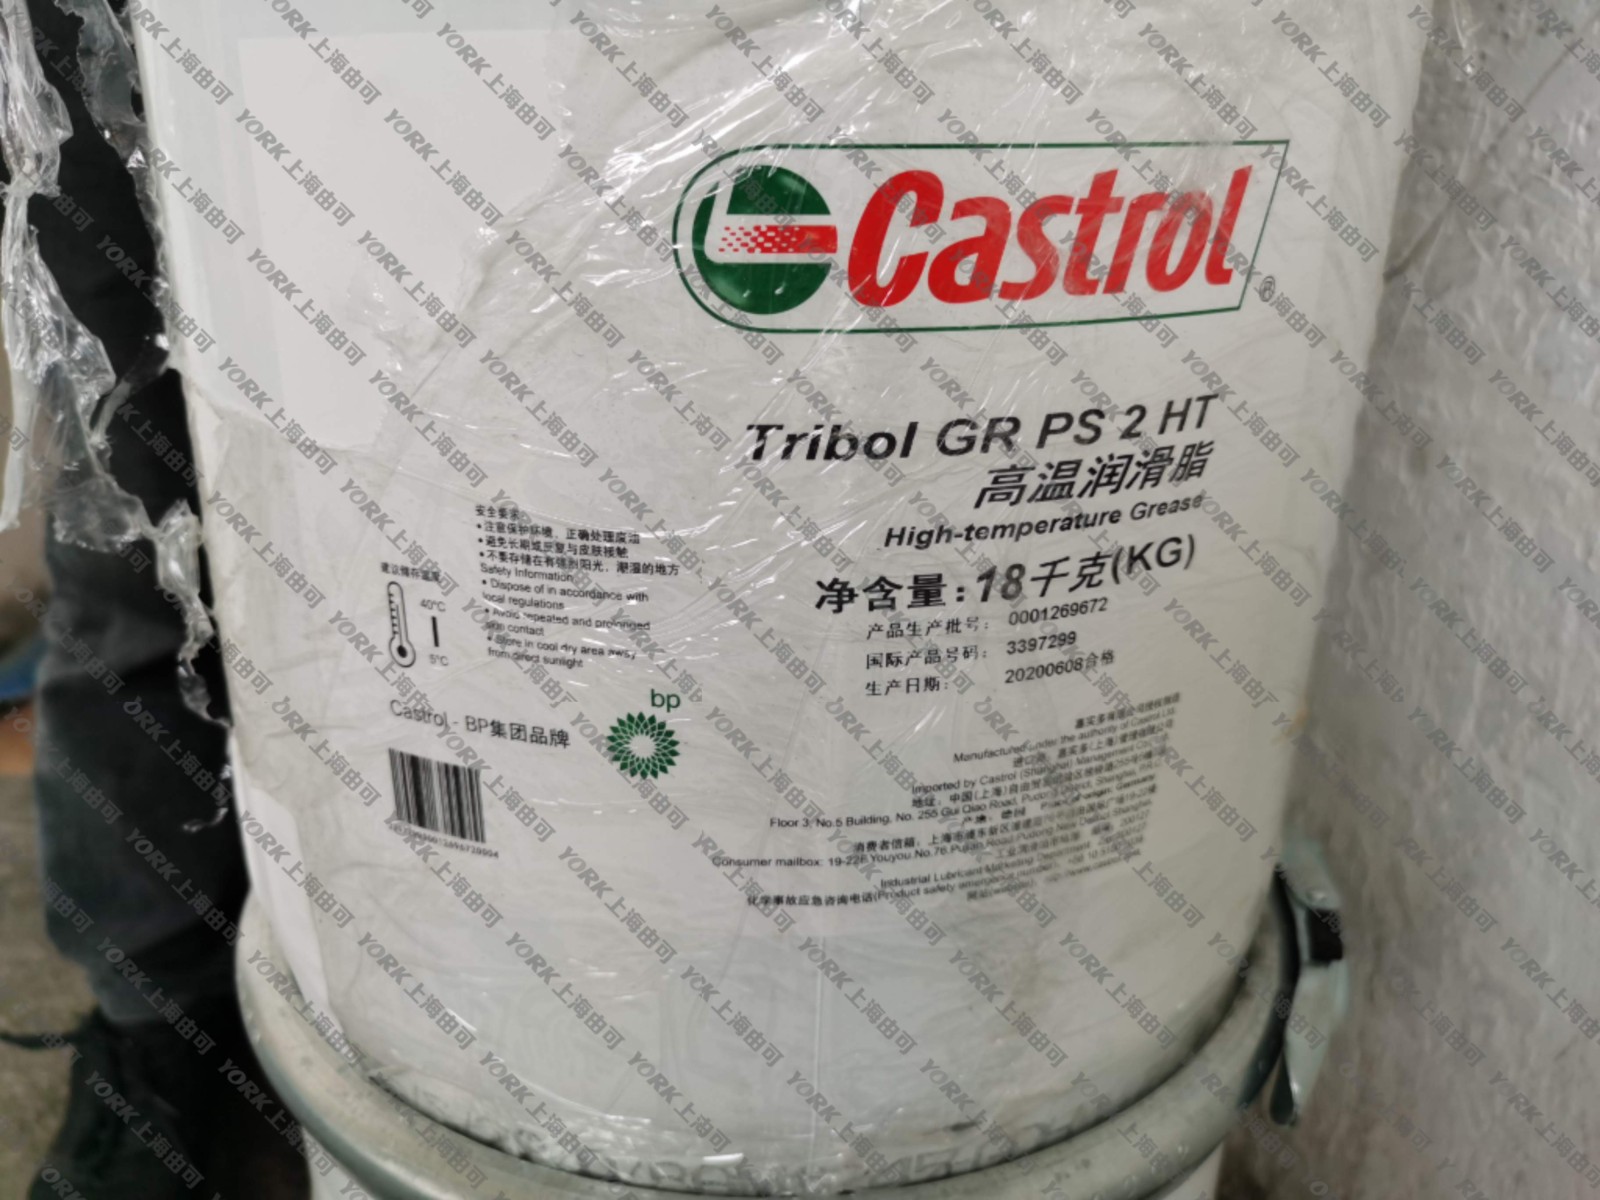 嘉实多/Castrol Tribol GR PS 2 HT高温润滑脂 